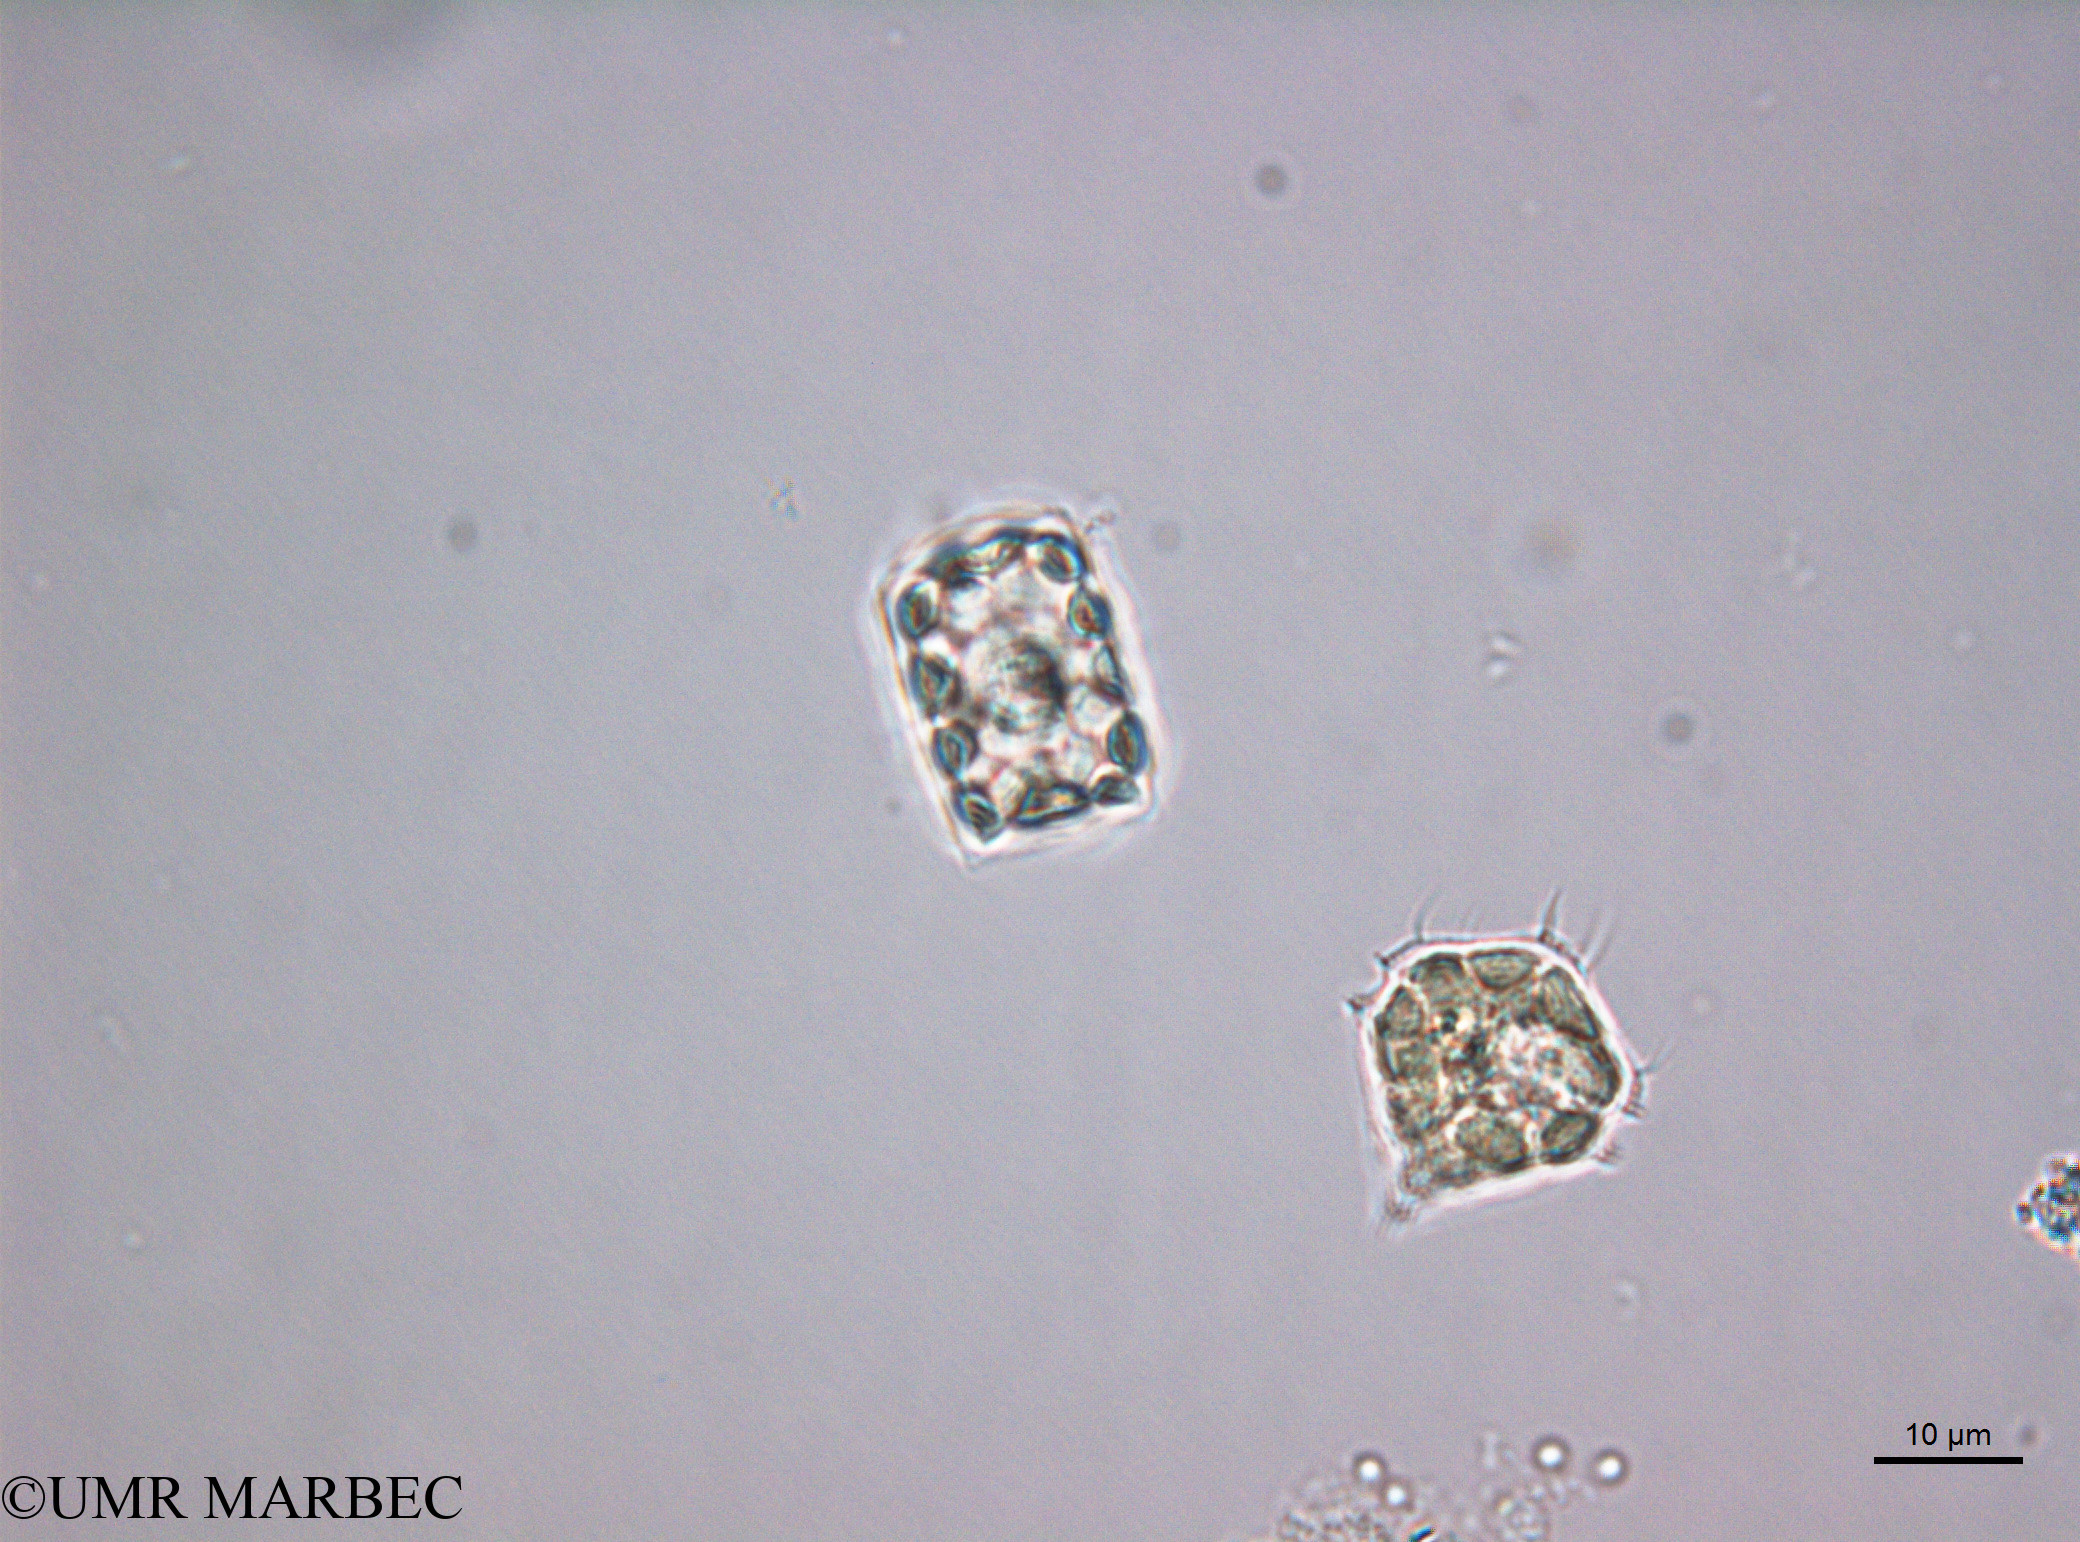 phyto/Scattered_Islands/juan_de_nova/COMMA2 November 2013/Cerataulina sp1 (D5_2_diatomee_ancien_melosira180717_001_ovl-38)(copy).jpg